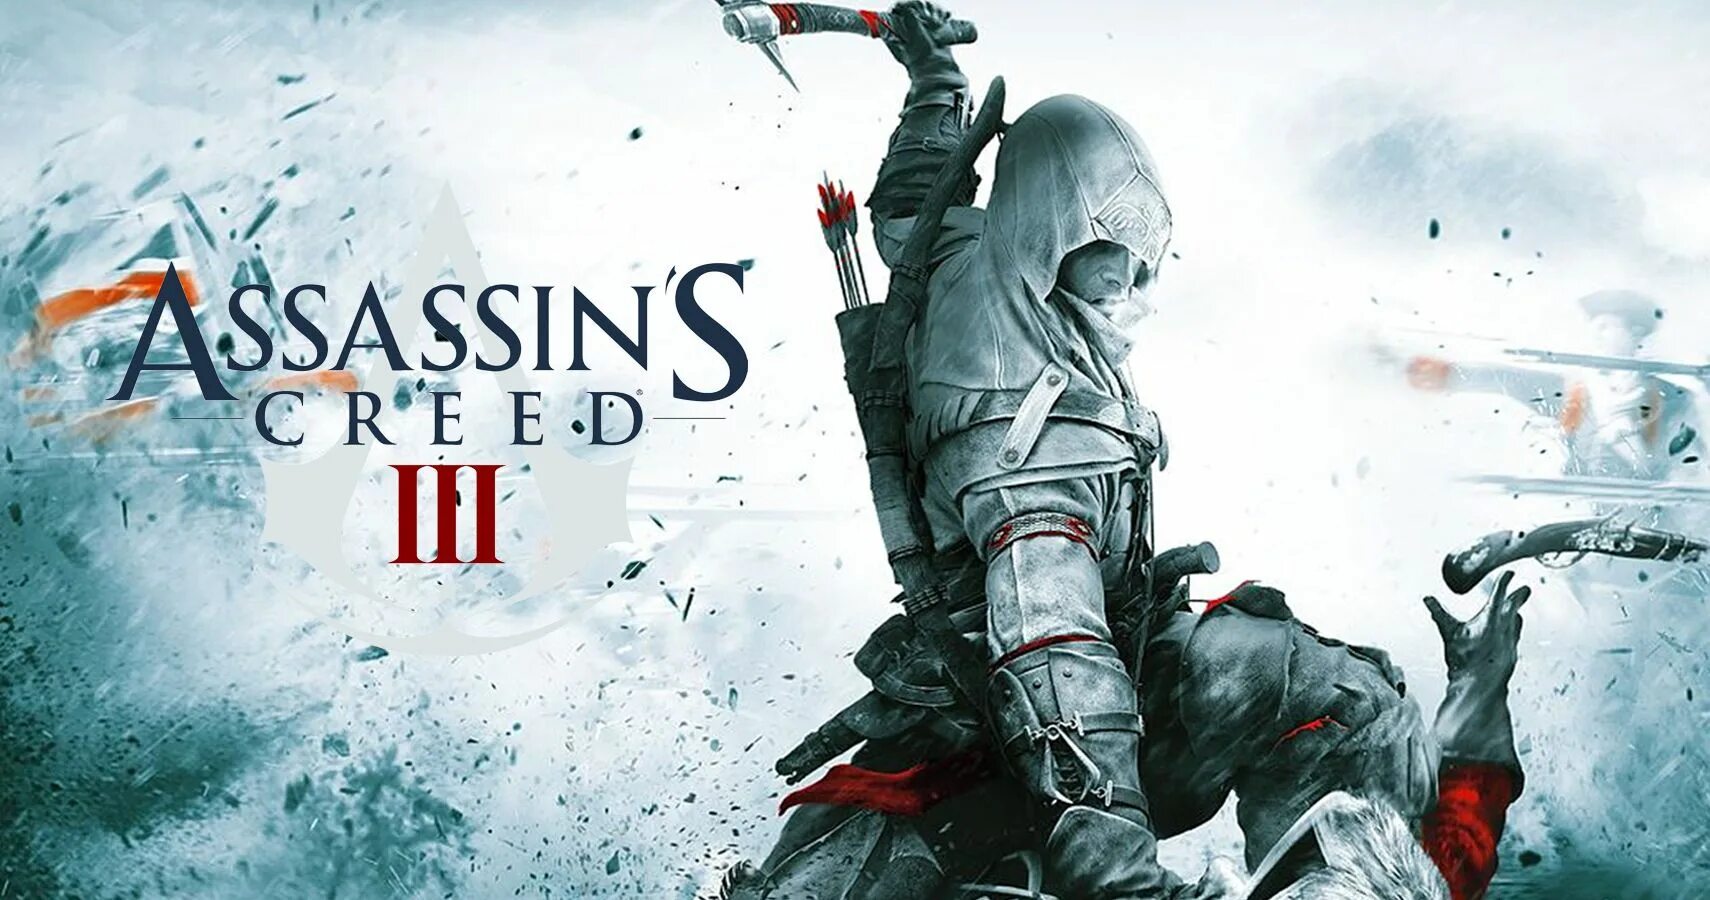 AC 3 Remastered. Ассасин Крид стим. Ассасин Крид 3 Ремастеред. Assassin's Creed 3 обложка.